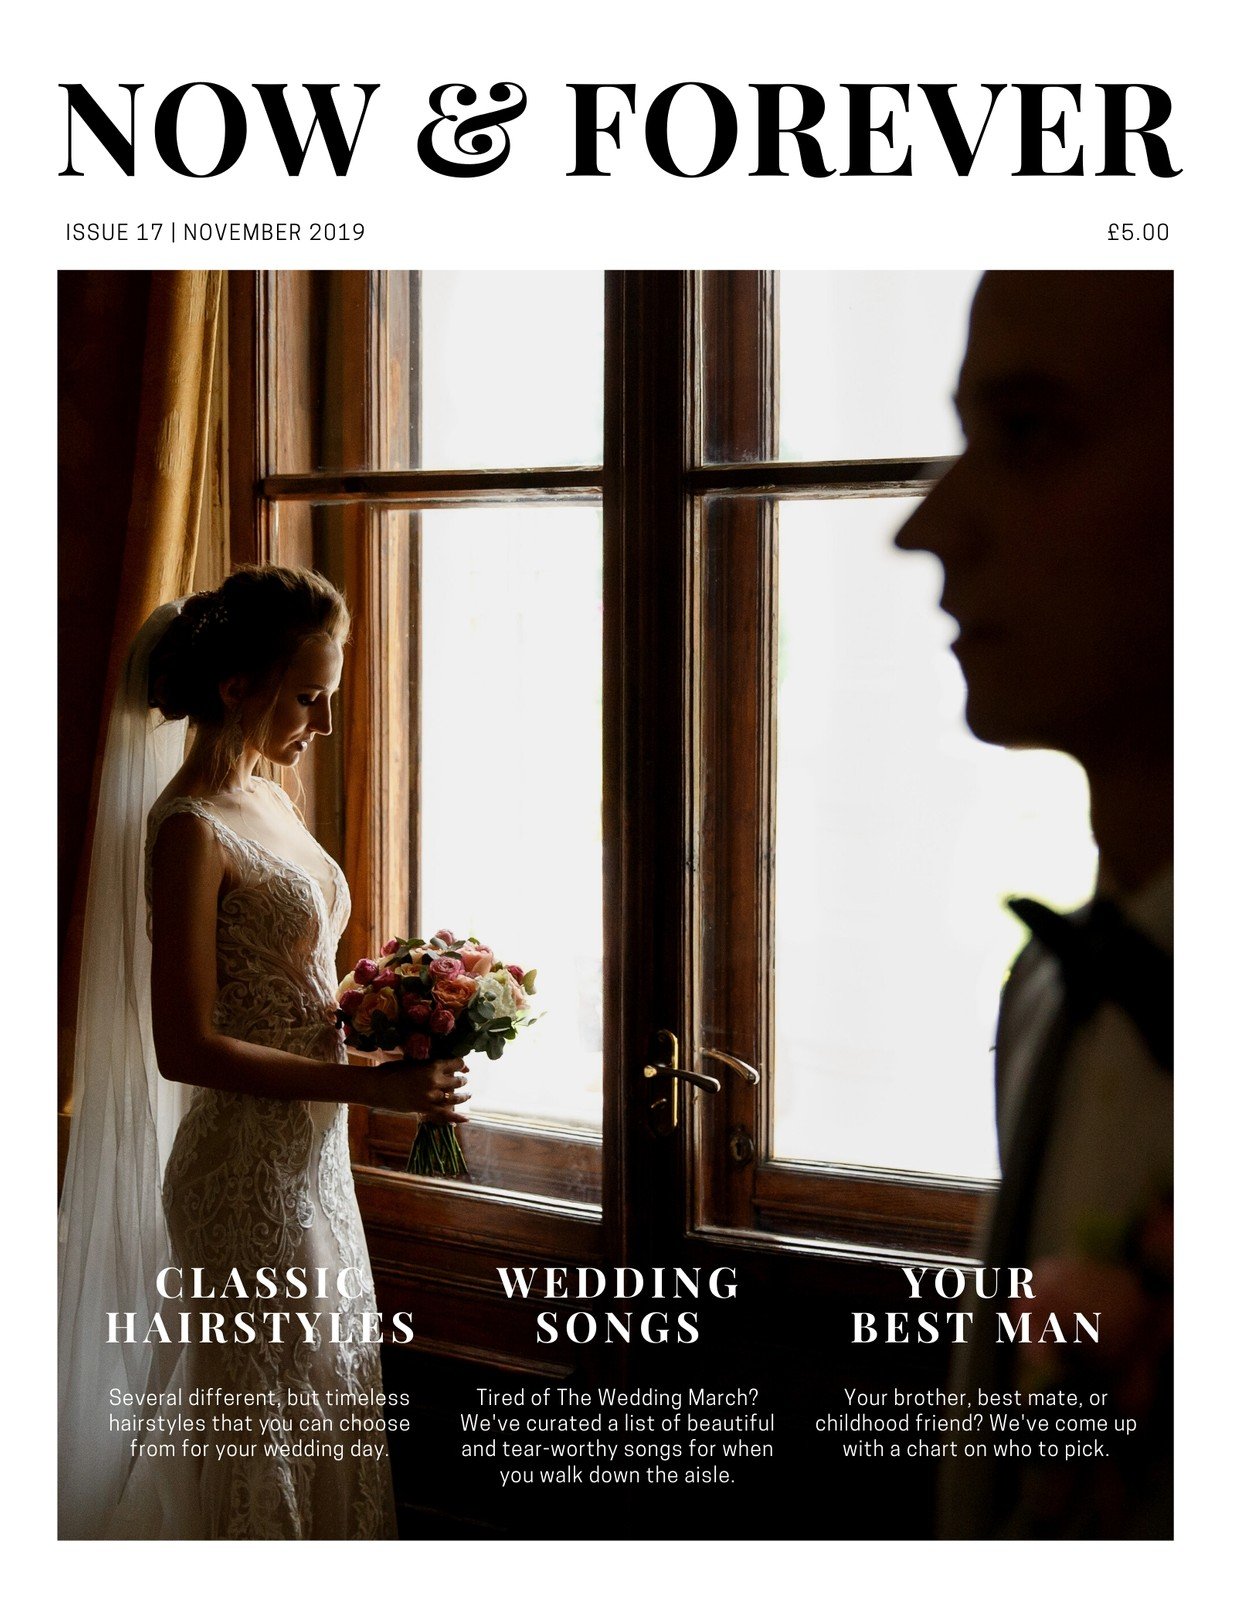 Wedding Magazine Template Psd Free Download